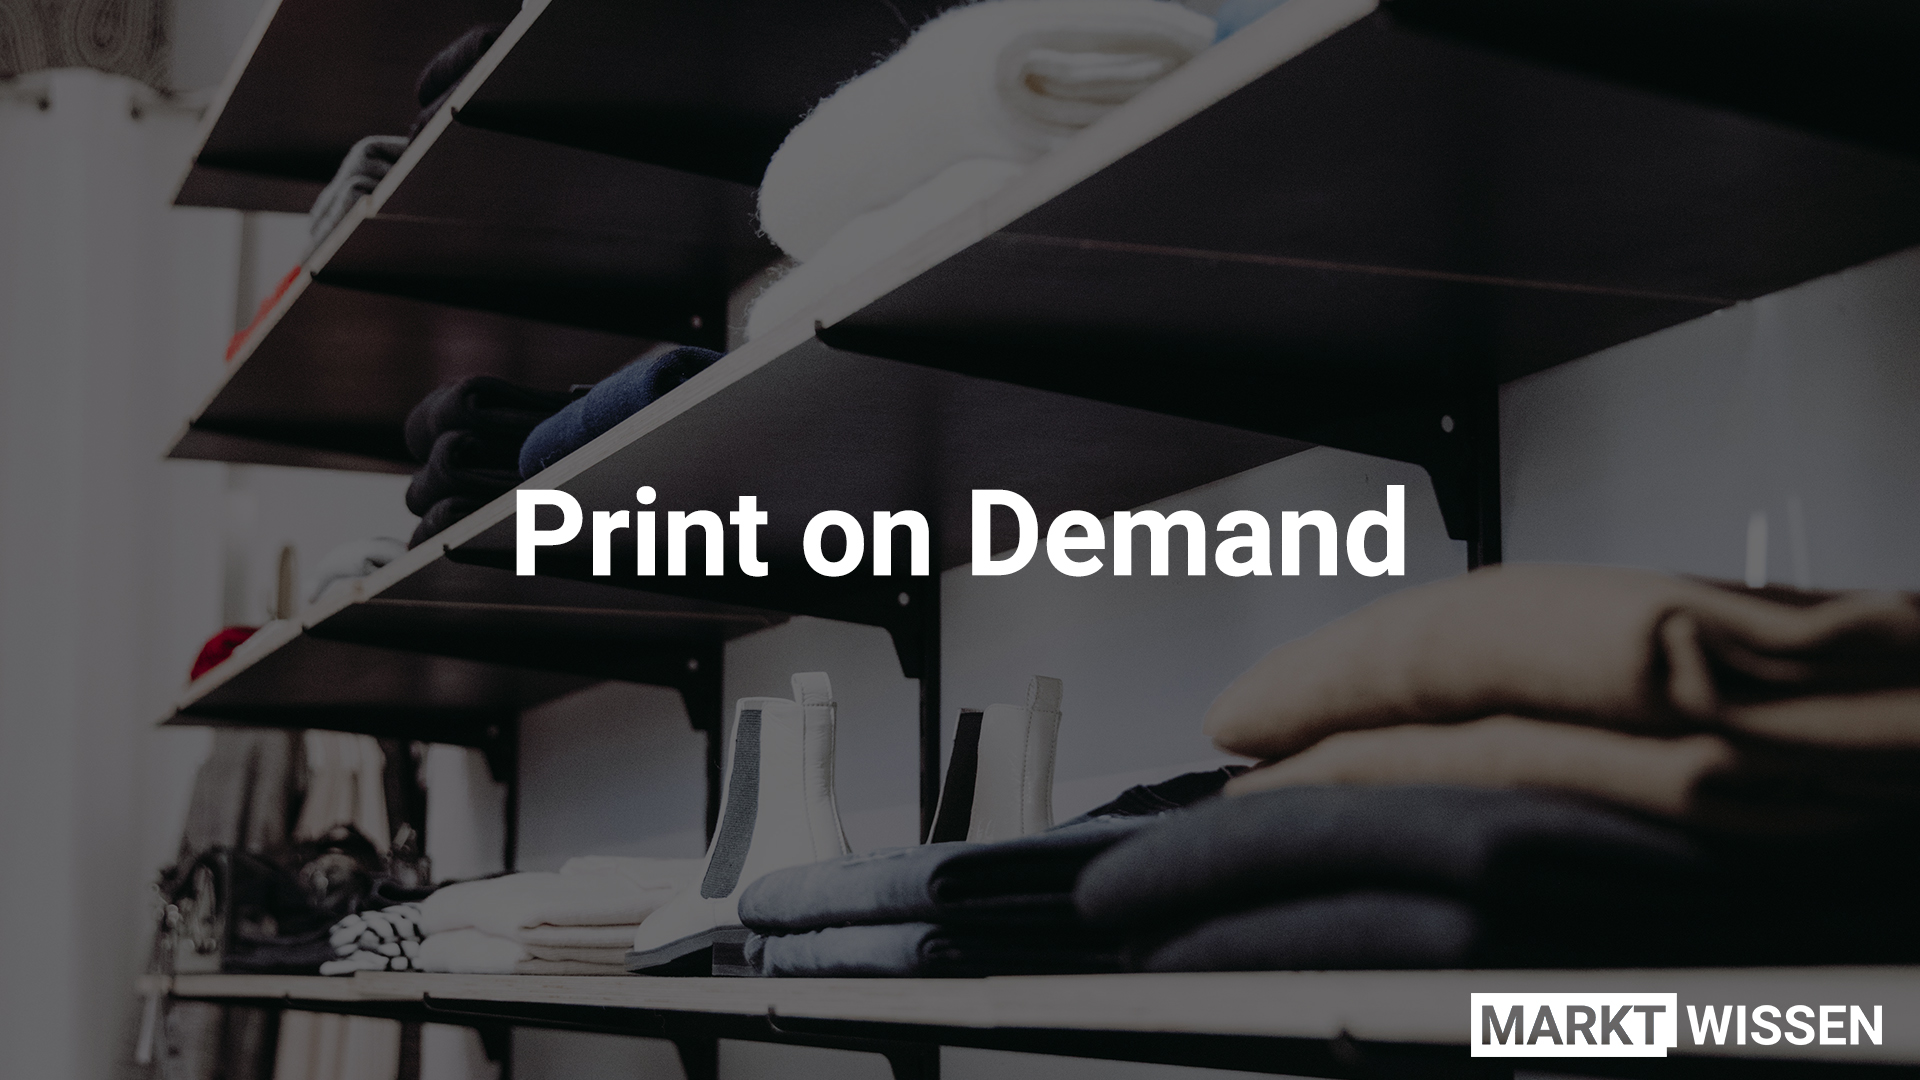 Print-on-Demand